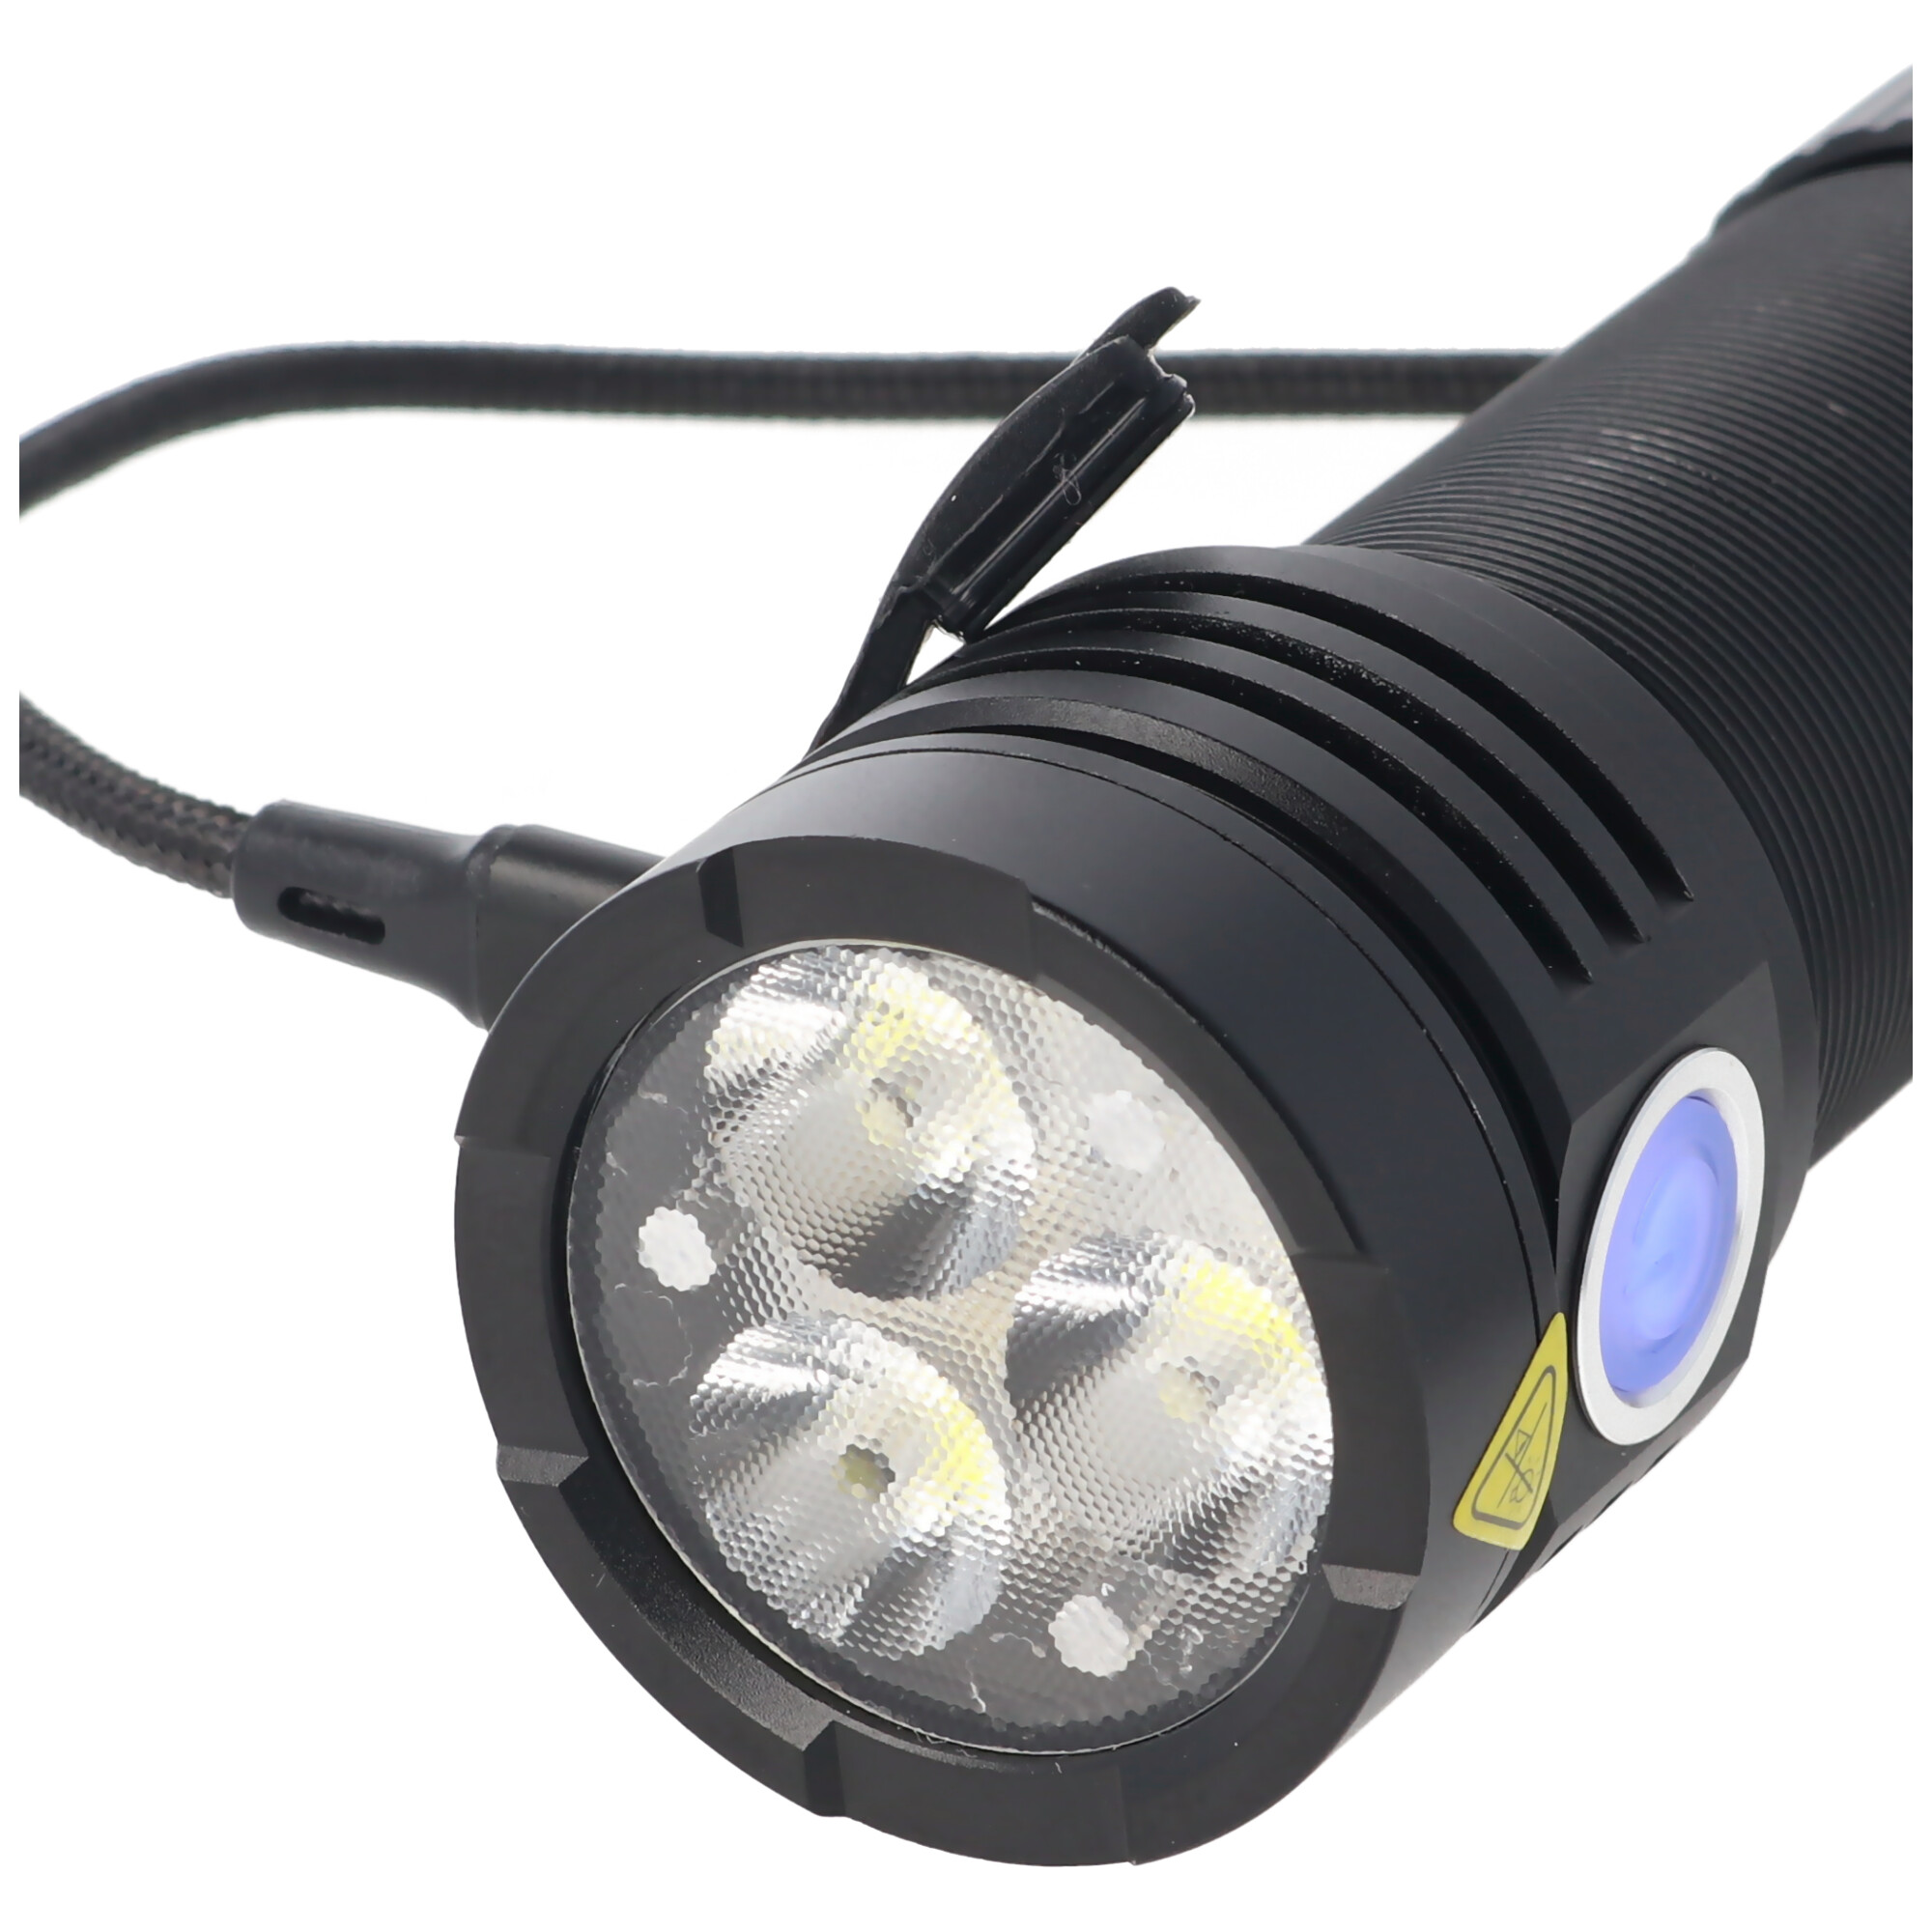 Bullworker die ultrahelle LED-Taschenlampe mit Osram LED max. 3300 Lumen inklusive Akku